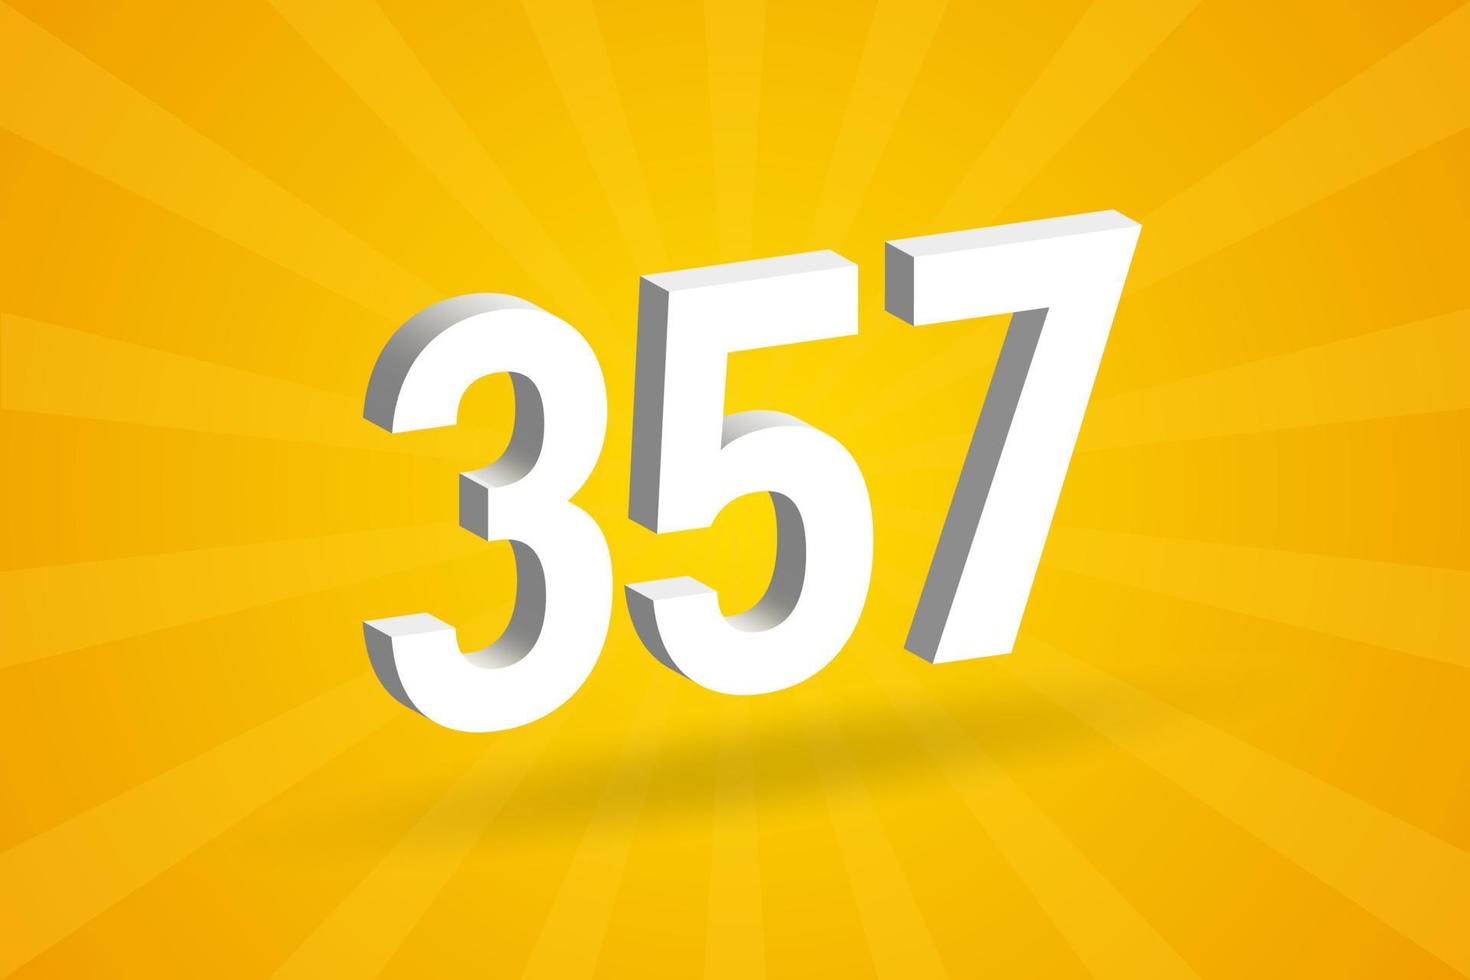 3d 357 siffra font alfabet. vit 3d siffra 357 med gul bakgrund vektor